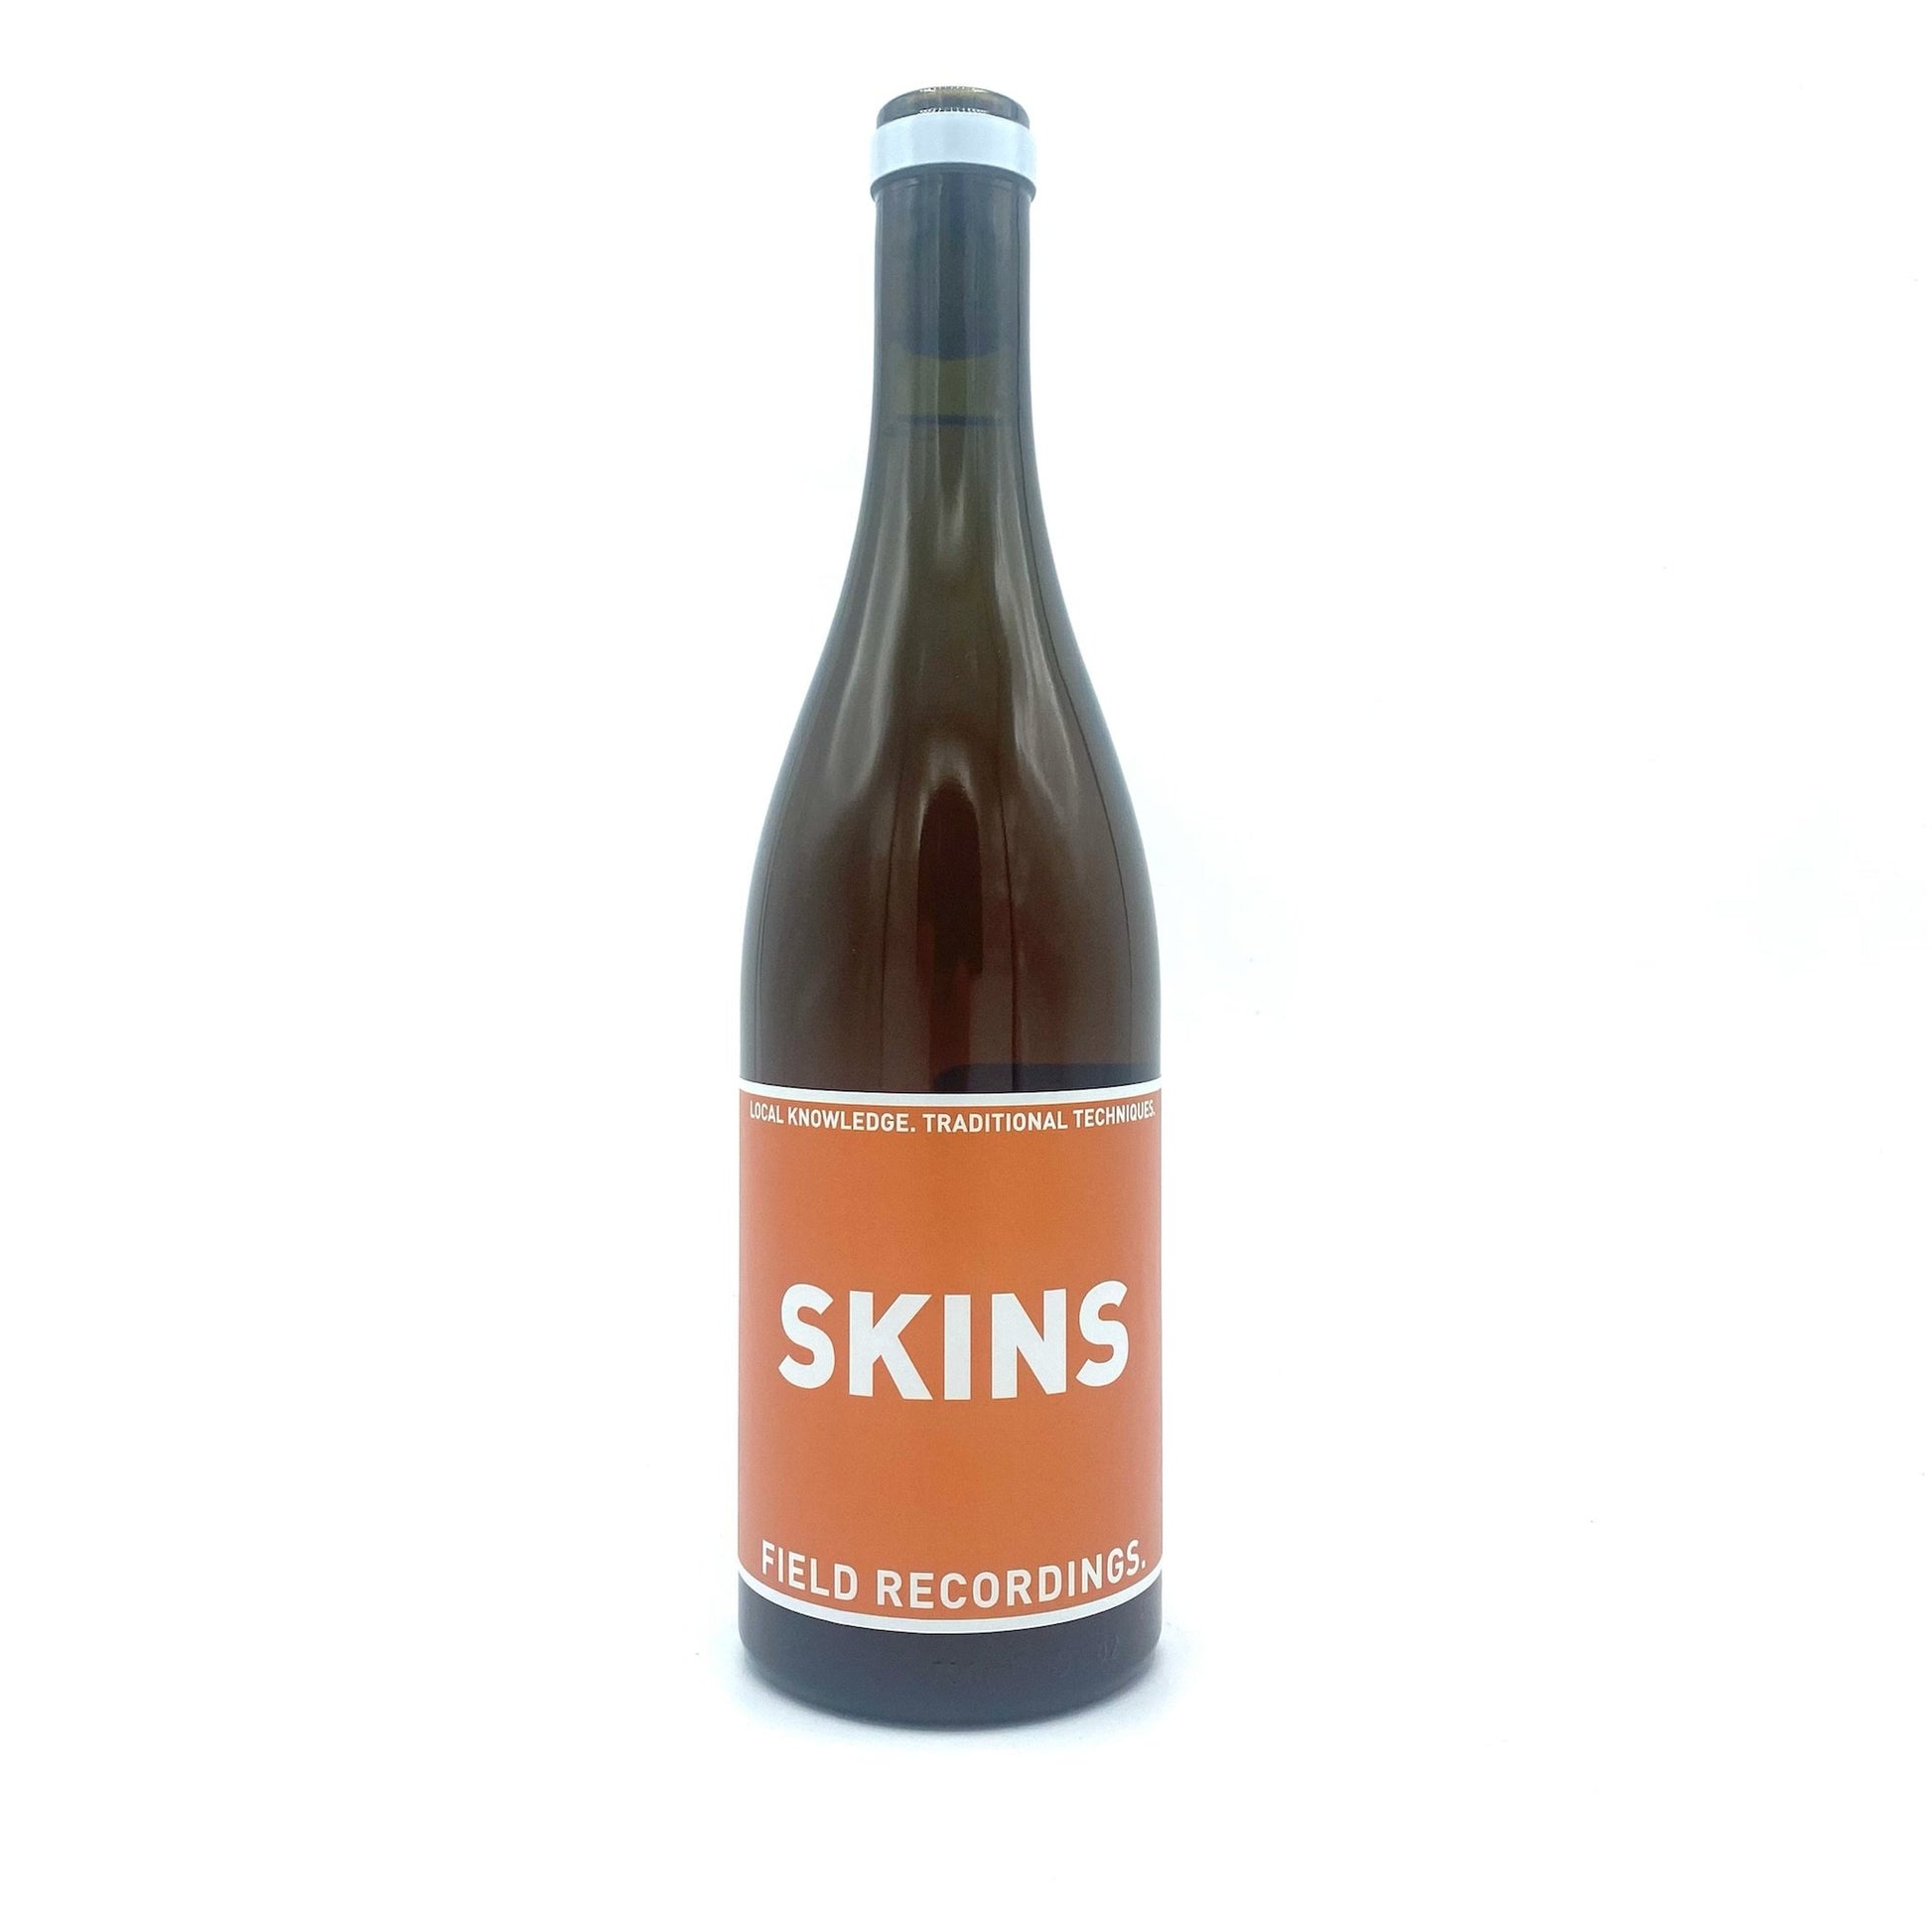 Skins Orange Wine, Field Recordings, USA